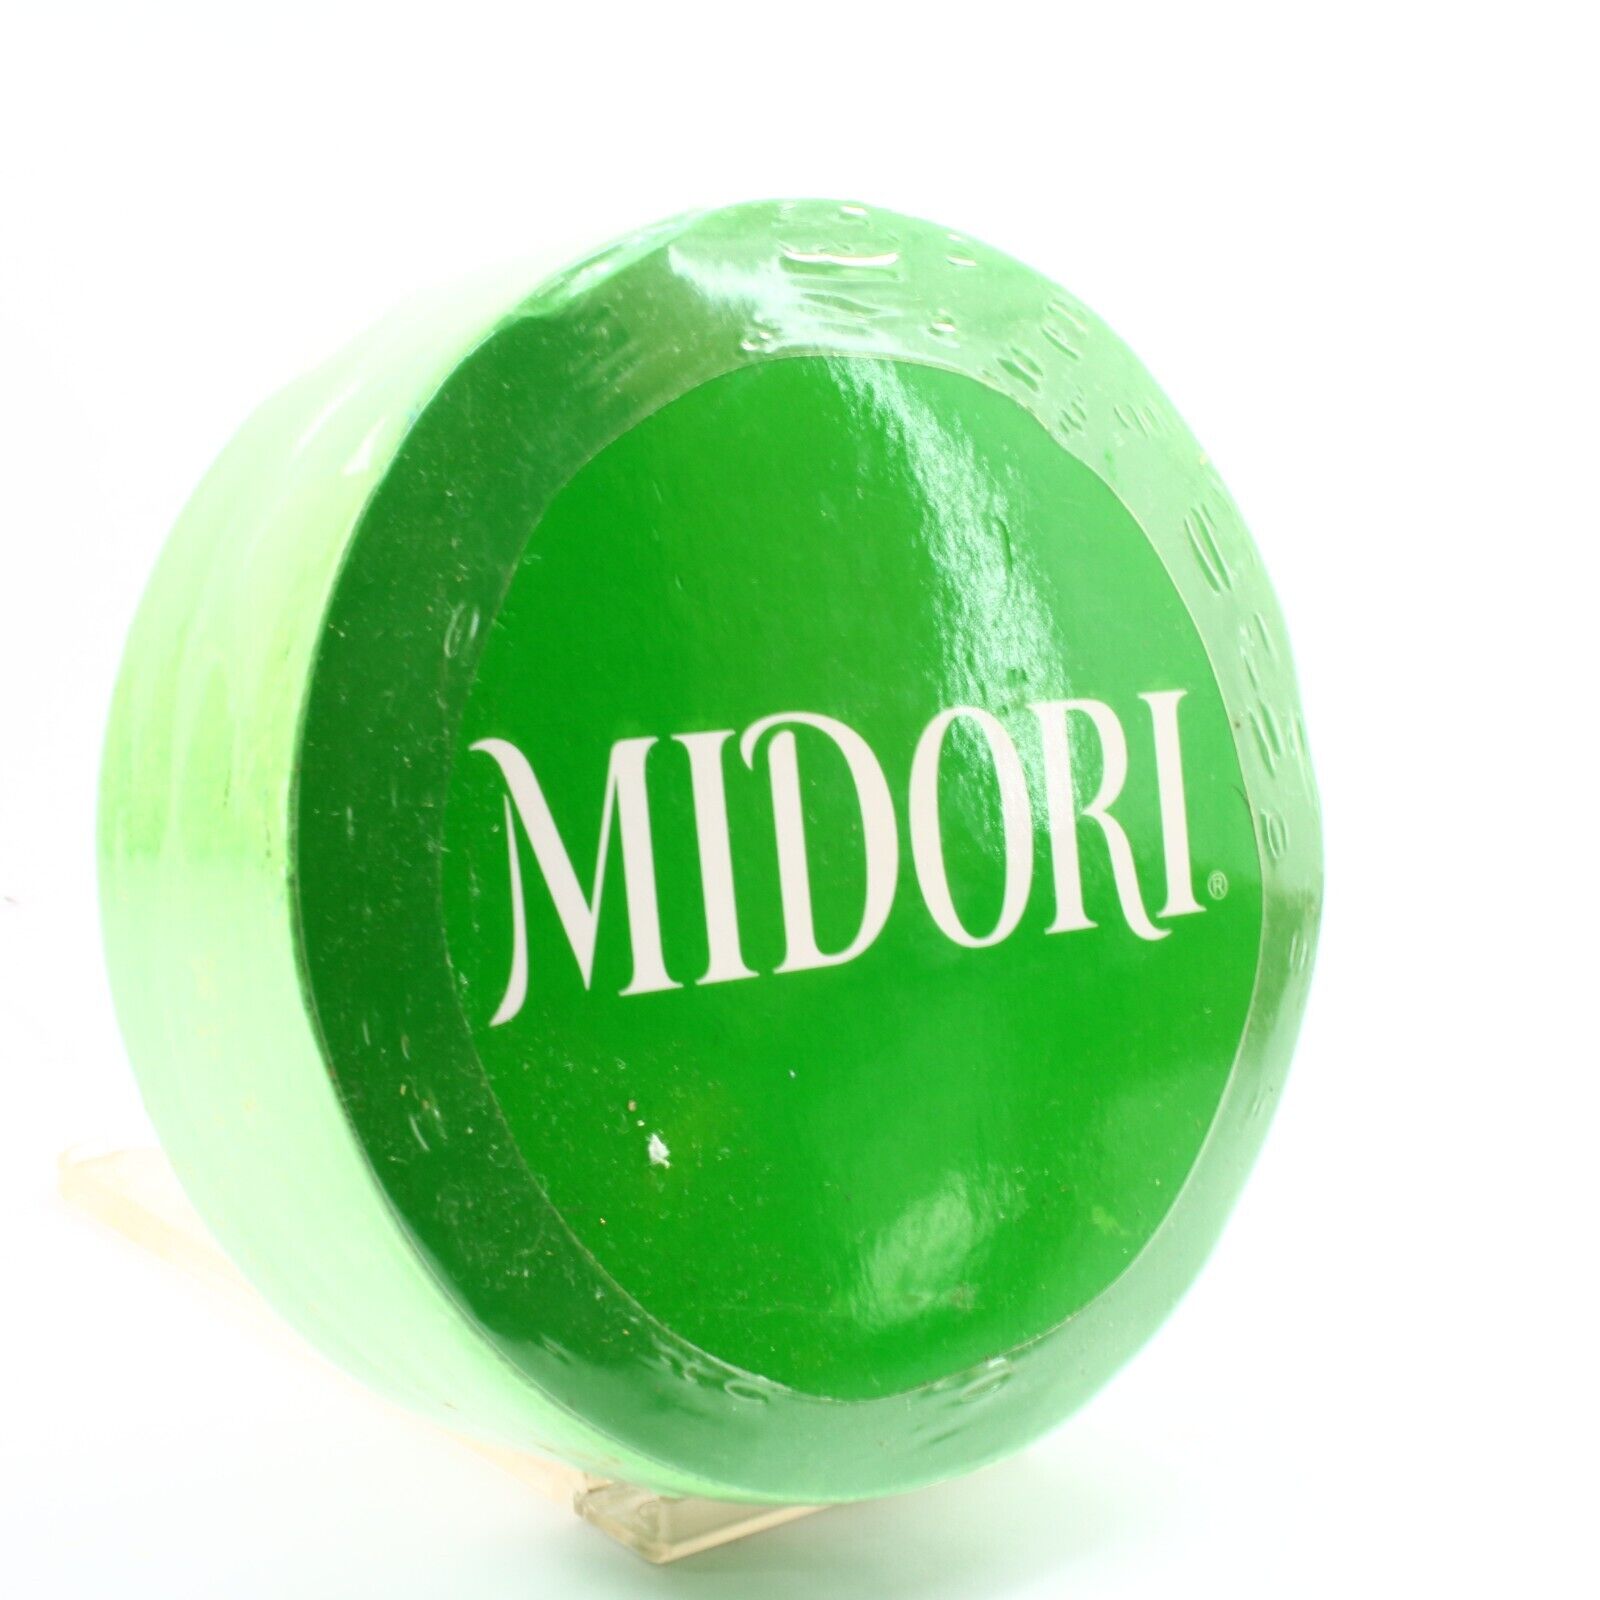 Midori Melon Liqueur Green Beach Towel ● Rare Sealed Promotional Item ● Fast ✉